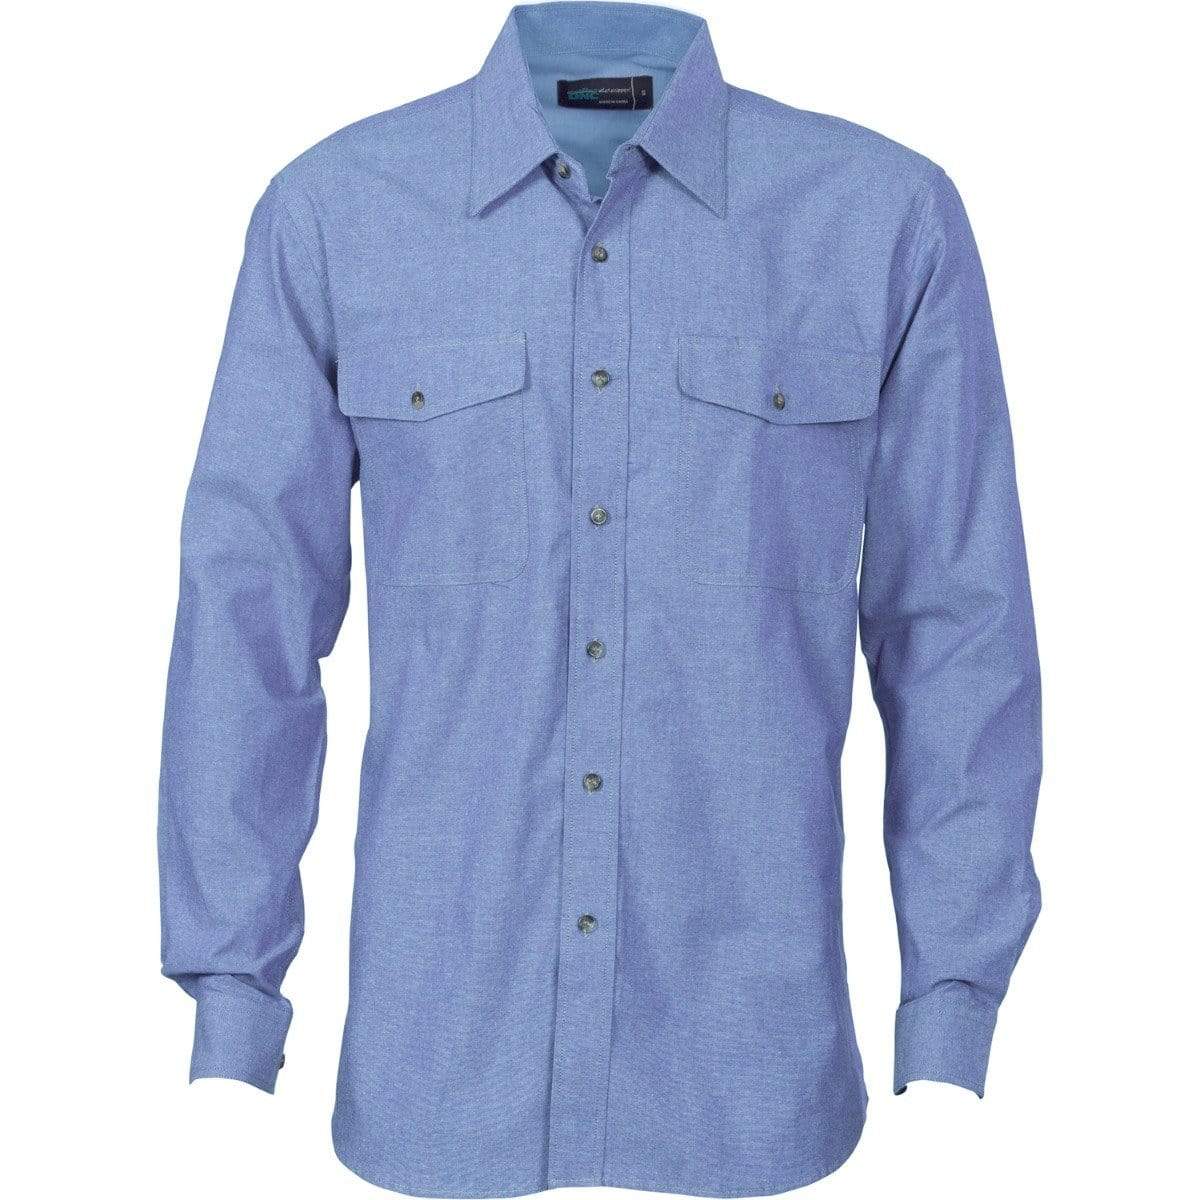 Dnc Workwear Men’s Cotton Chambray Long Sleeve Twin Flap Pocket Shirt - 4104 Work Wear DNC Workwear Chambray S 